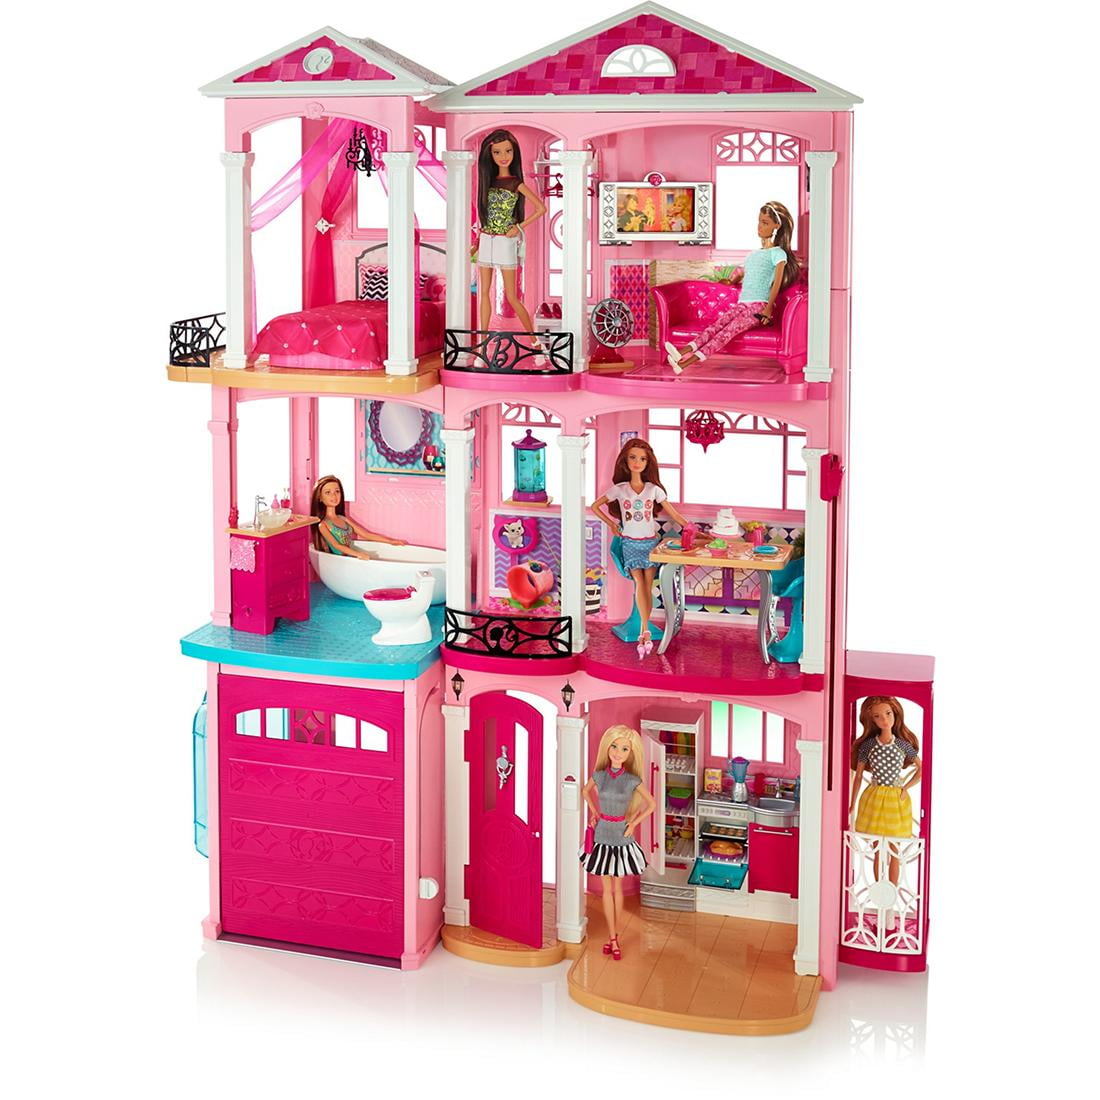 barbie house at walmart